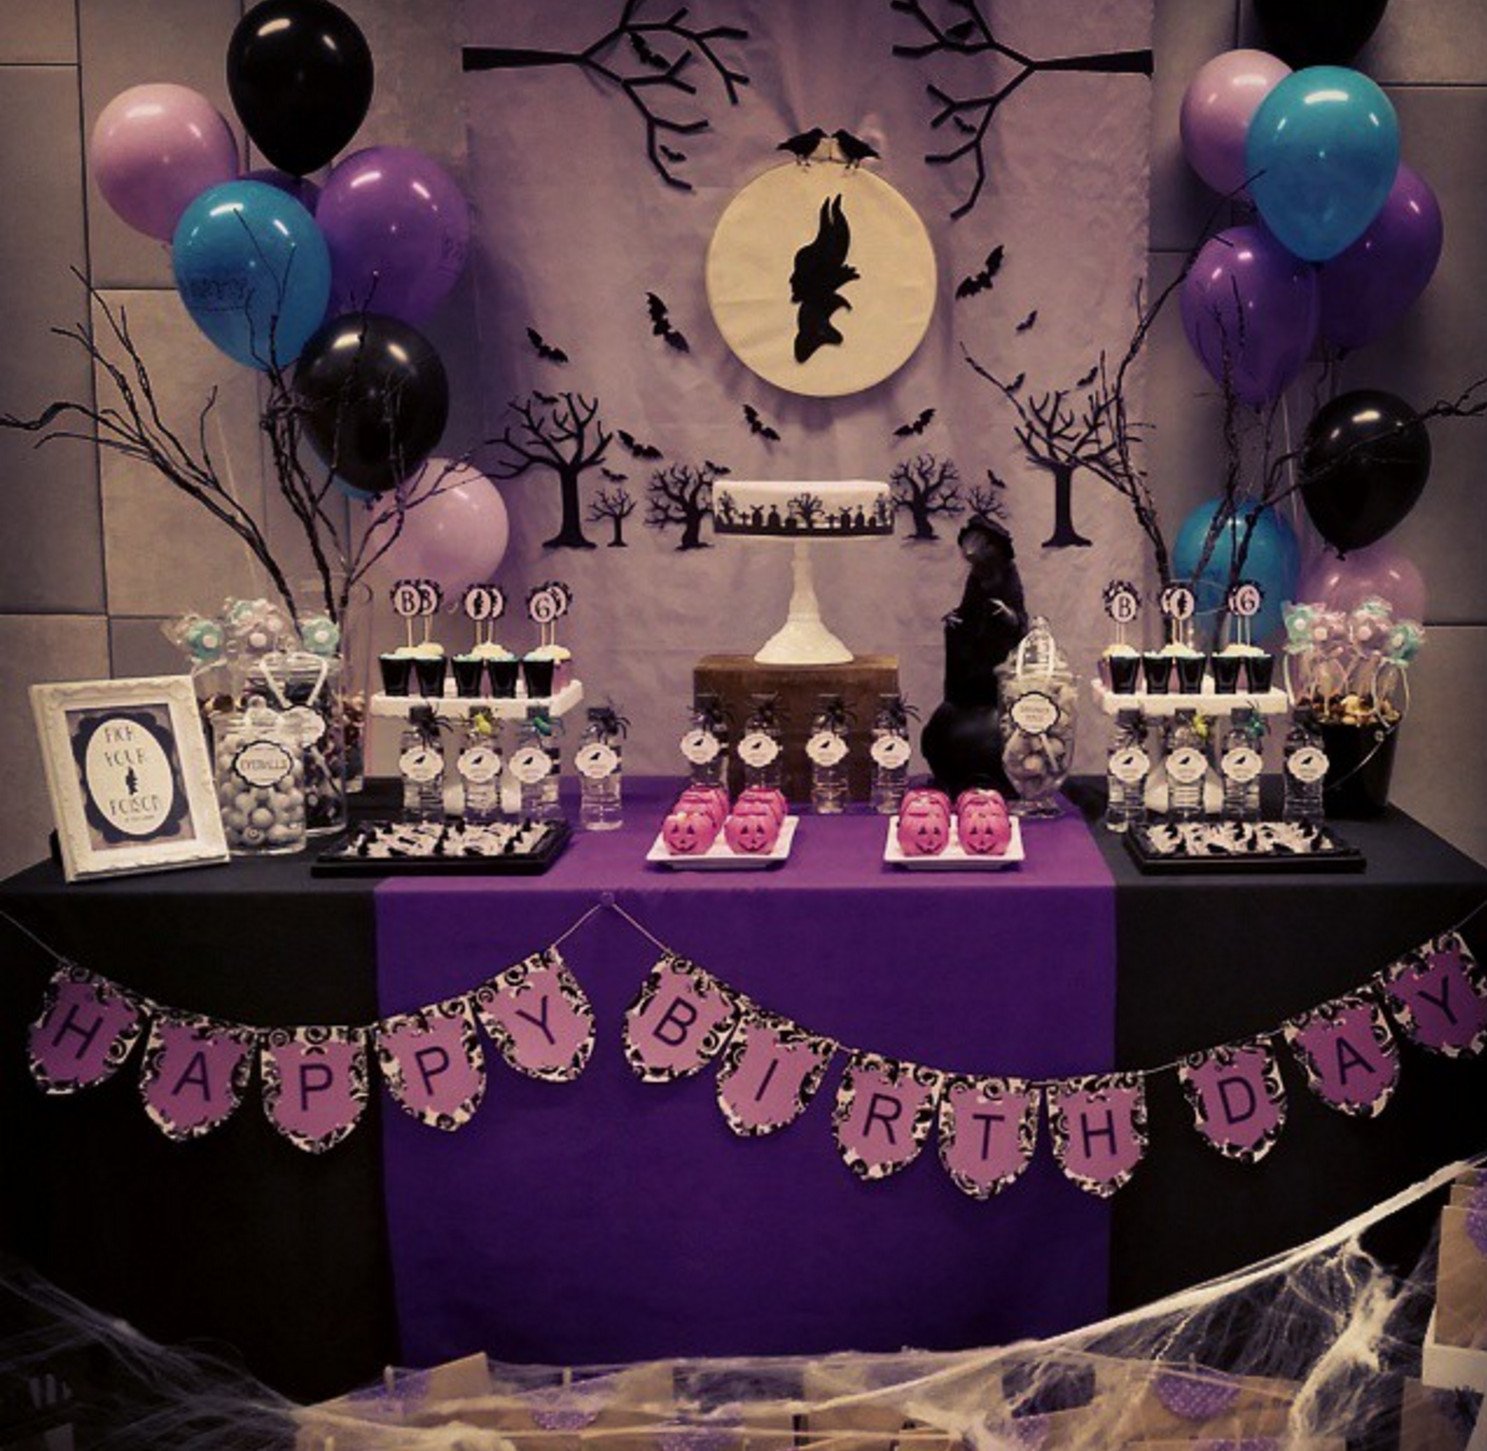 Best ideas about Vampirina Birthday Decorations
. Save or Pin Vampirina Party Decorations Now.